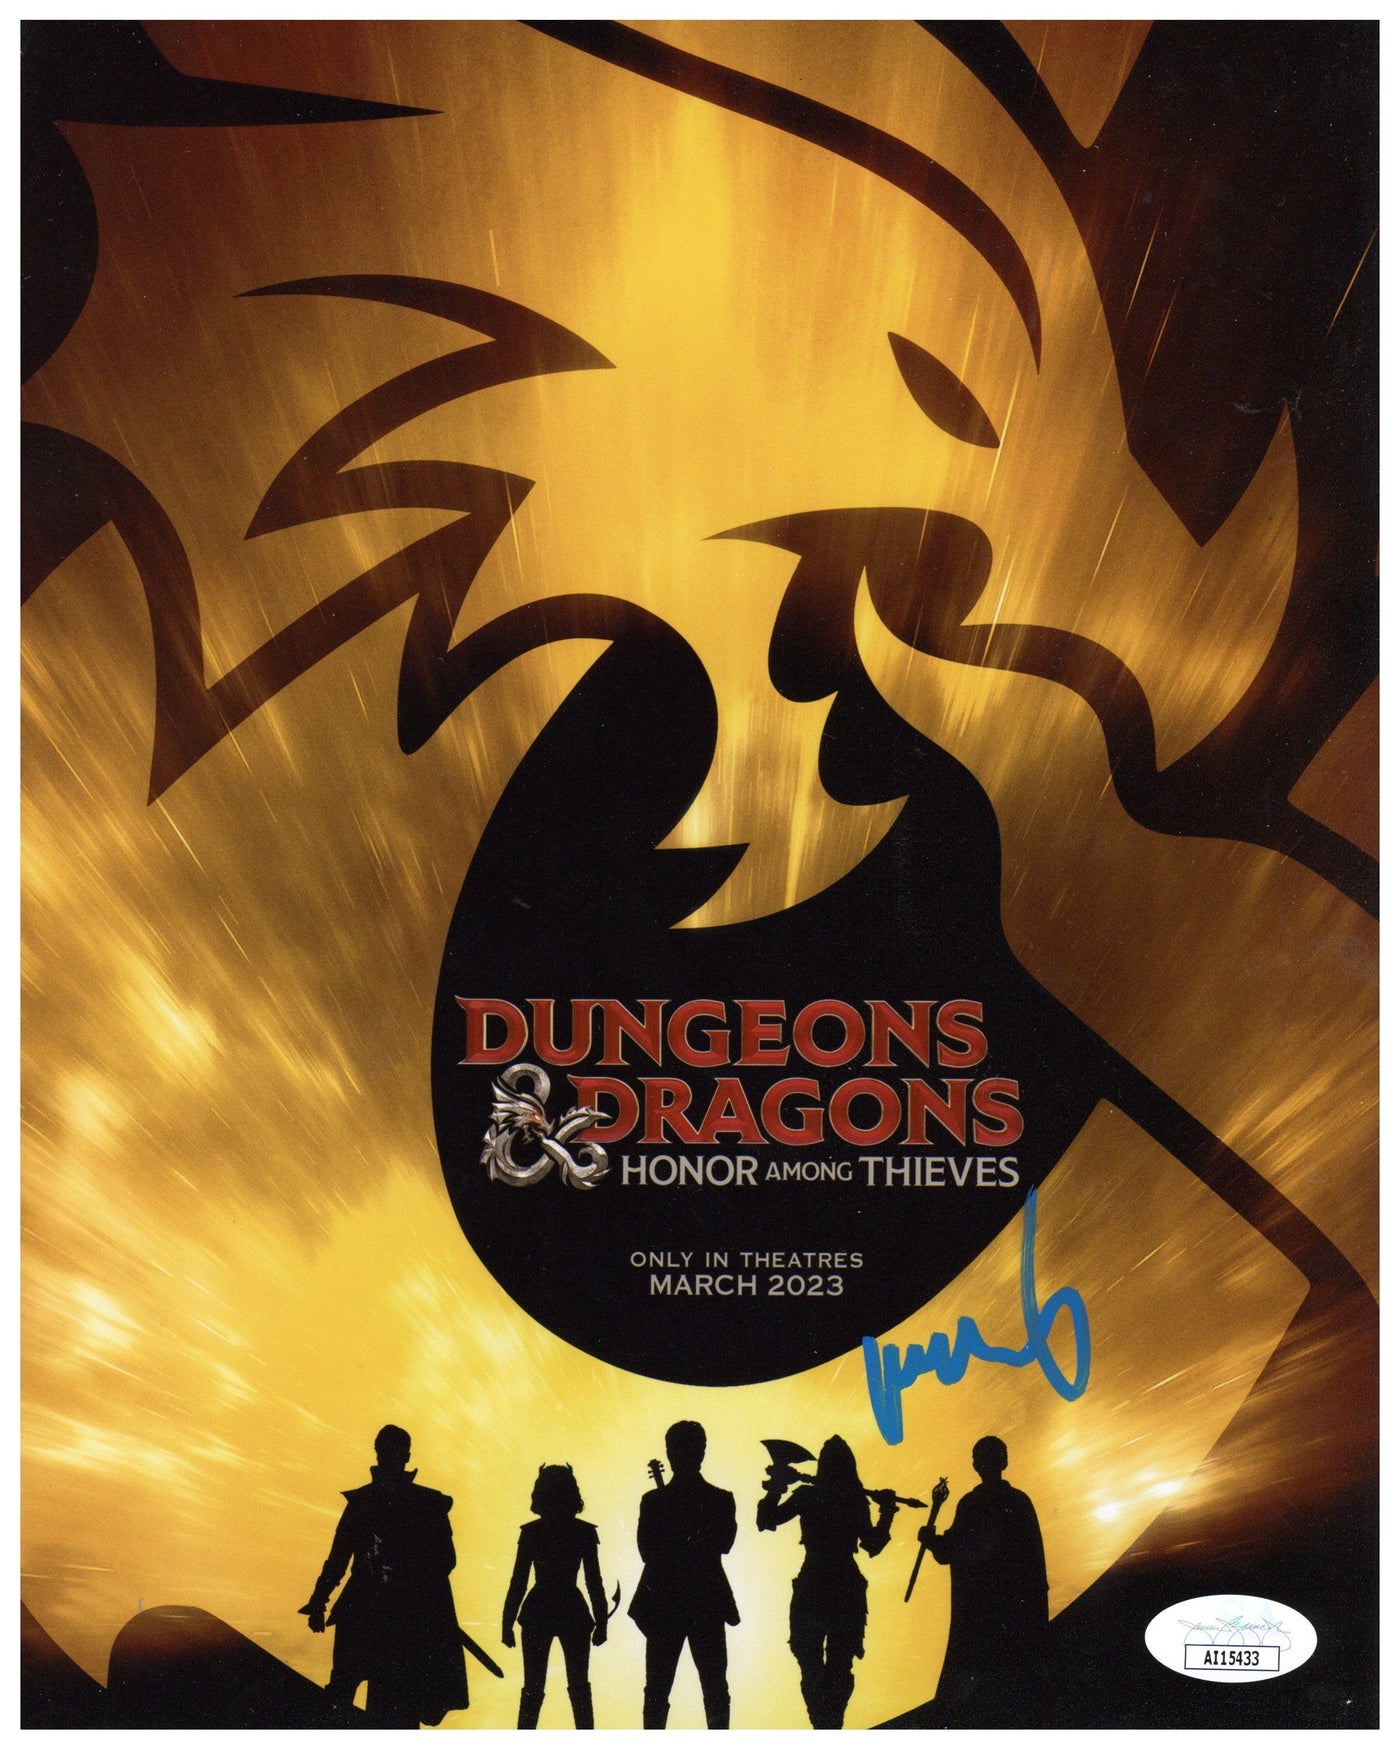 Michelle Rodriguez Signed 8x10 Photo Dungeons & Dragons Autographed JSA COA